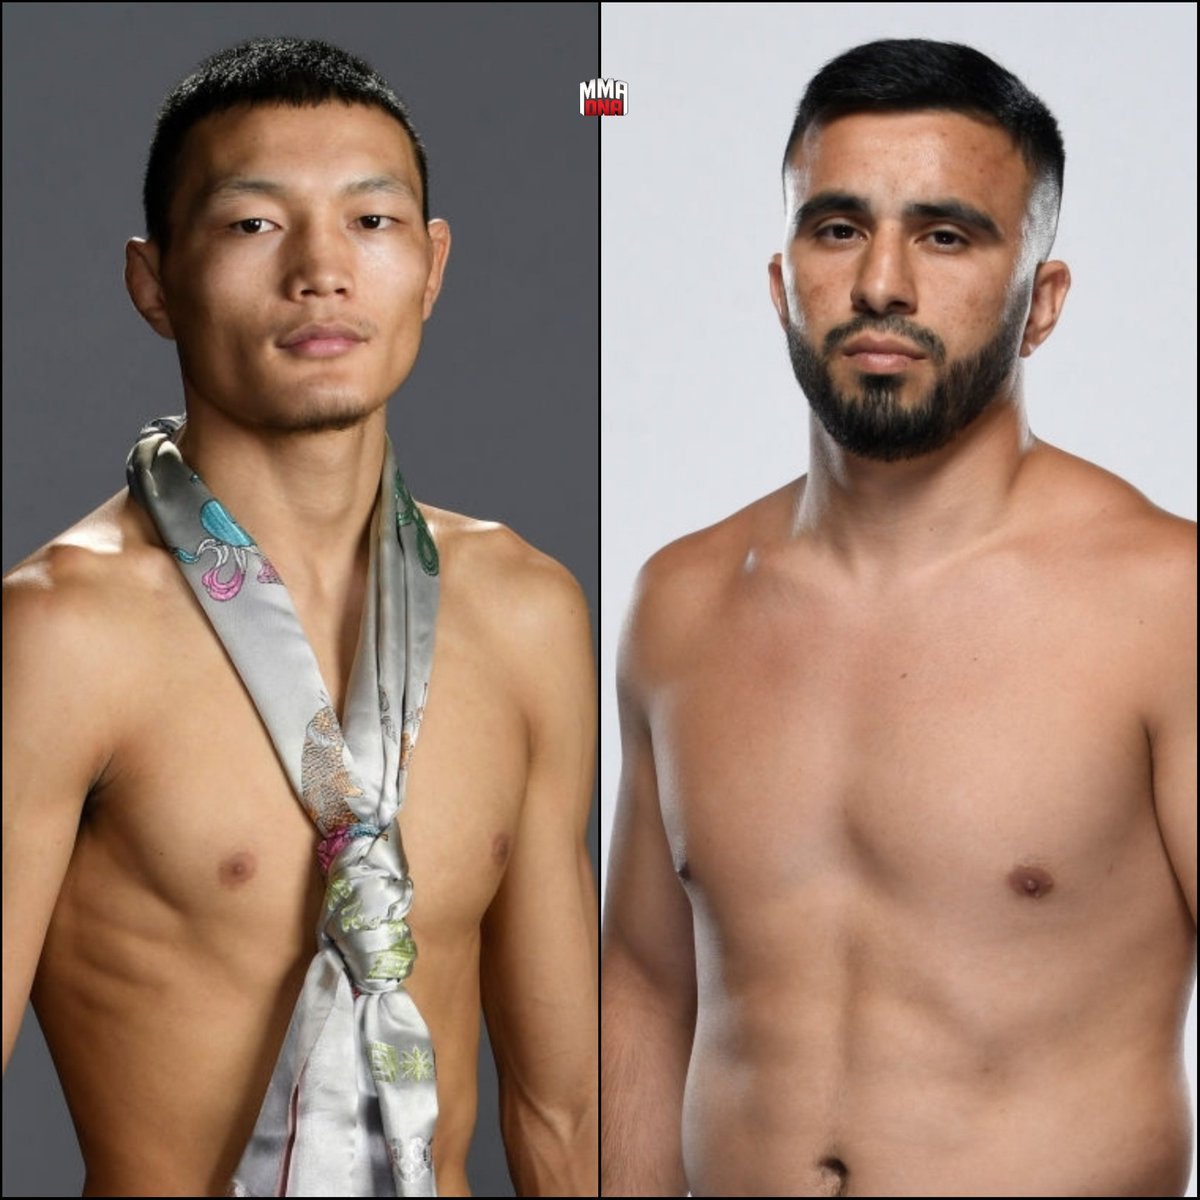 J.Molina out. Su Mudaerji (@mudaerji_su) in, will fight Zarrukh Adashev (@ZAdashev) at UFC event on January 20th. (first rep. Big Punches IG) #UFC #MMA #UFCESPN